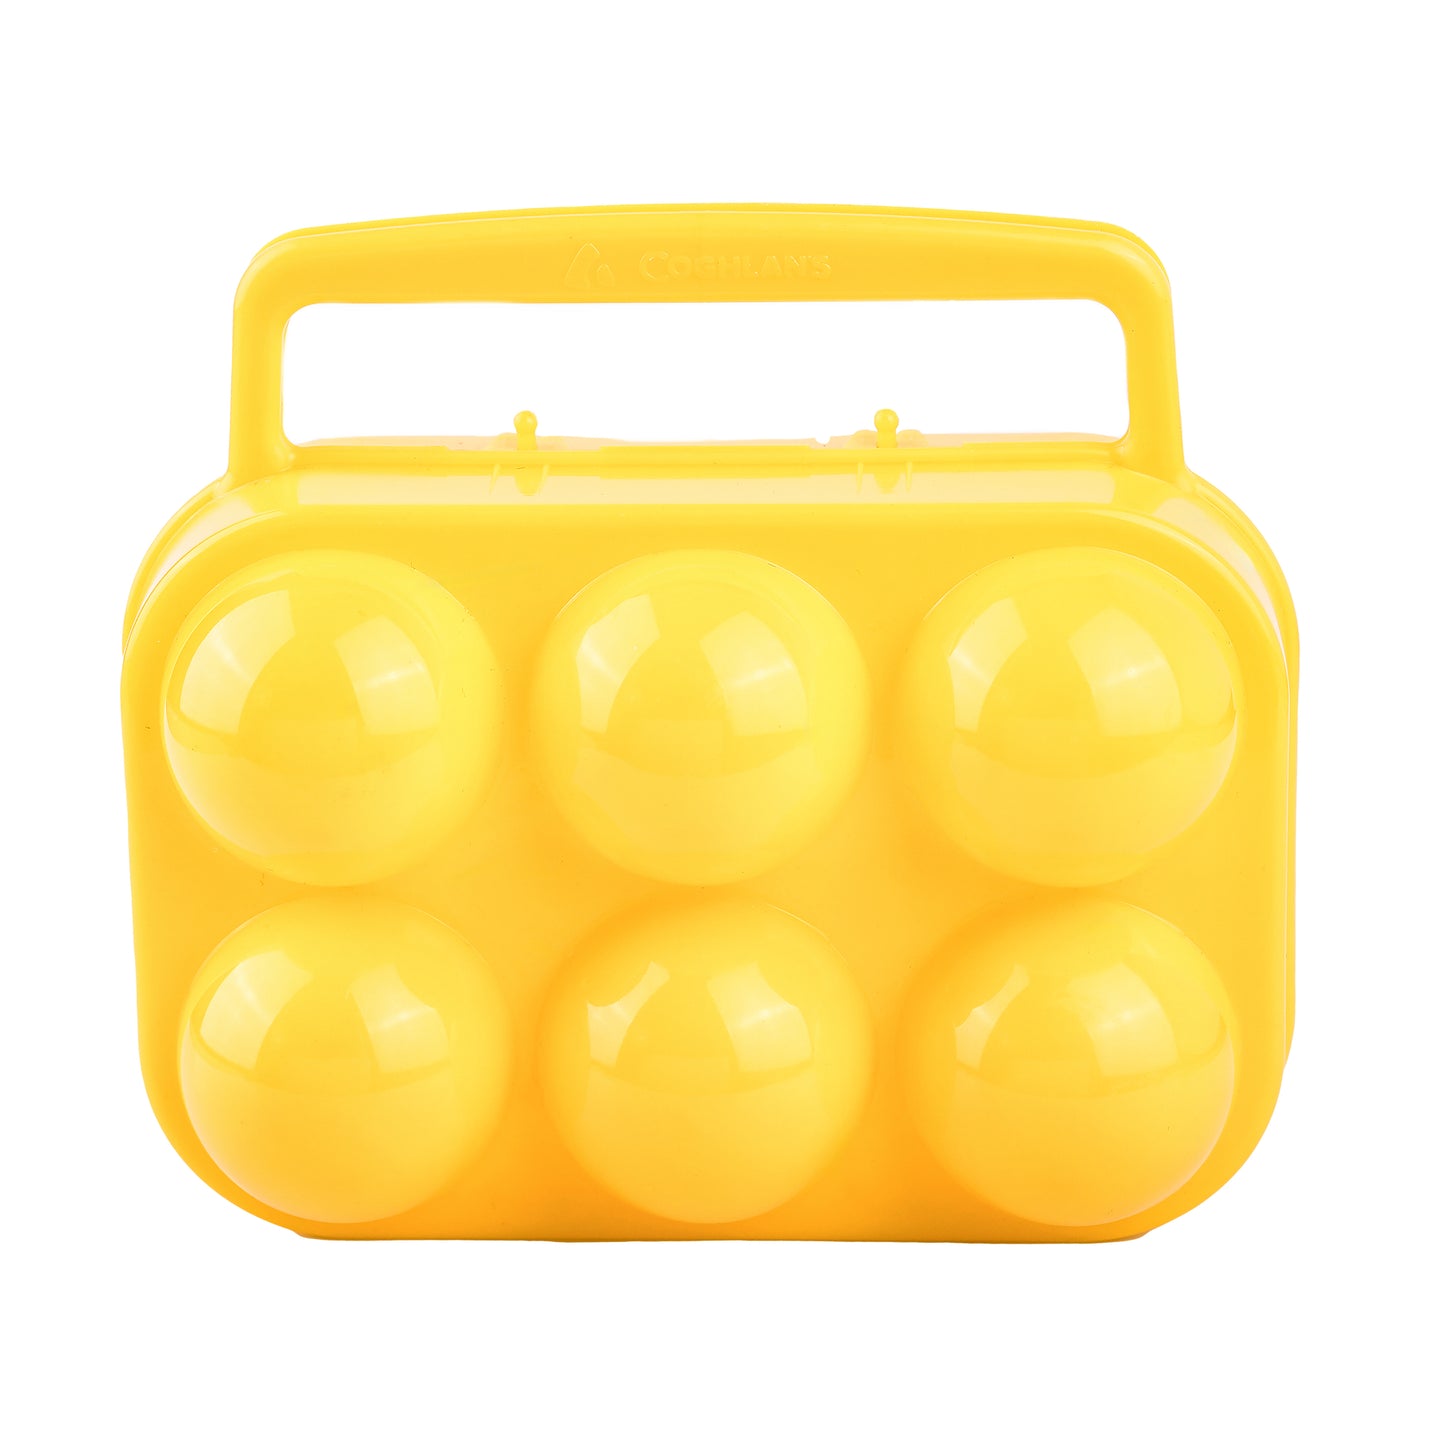 Porte-œufs – 6 unités